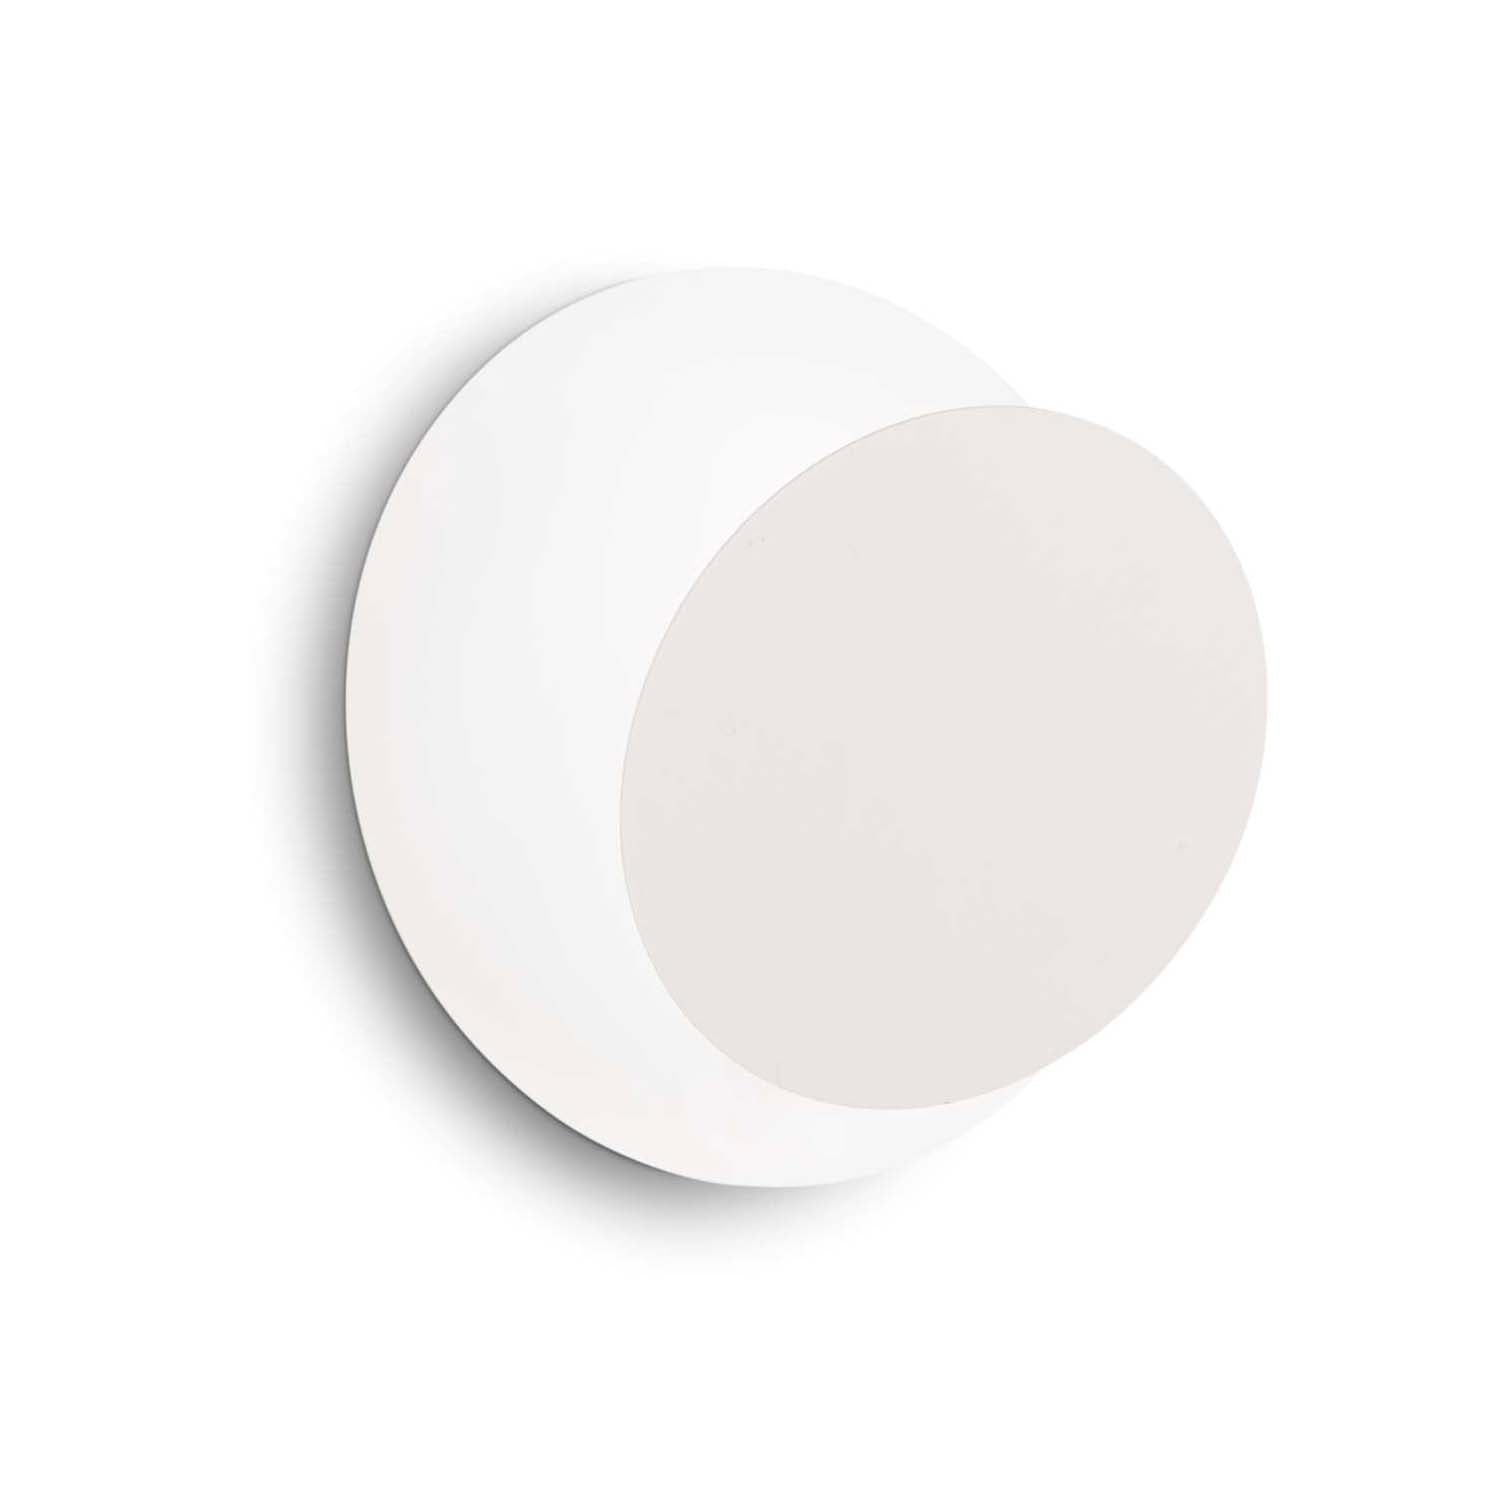 TICK - Double disc wall light indirect lighting